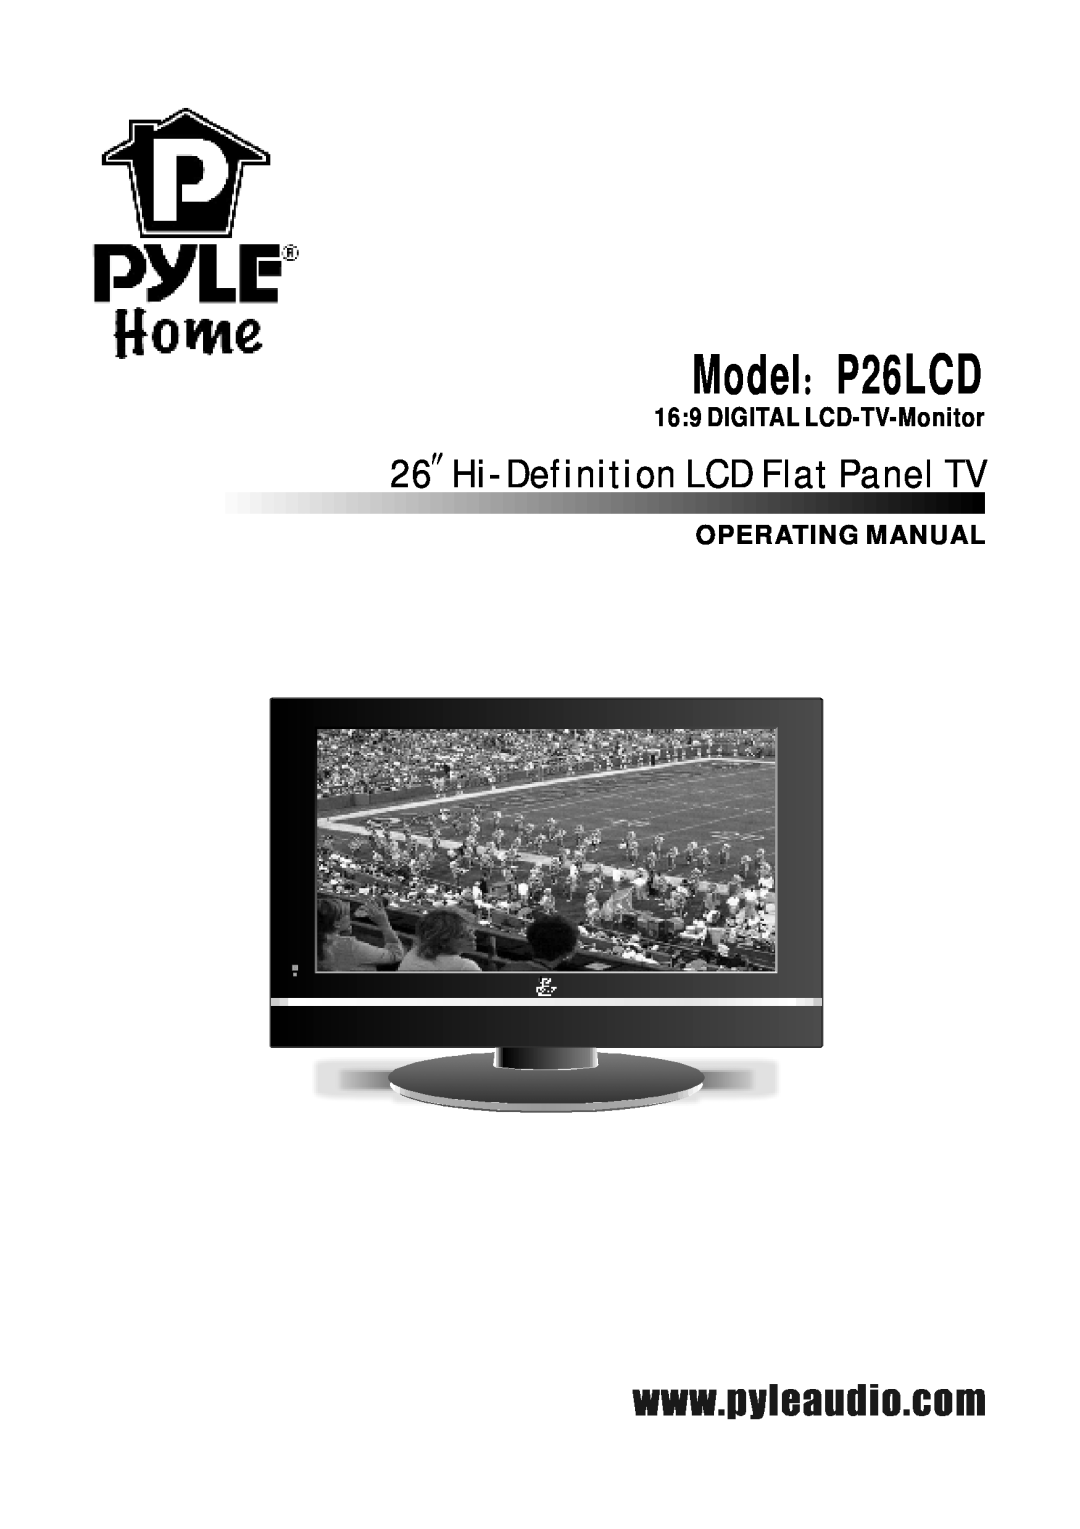 Radio Shack manual DIGITAL LCD-TV-Monitor, Operating Manual, Model：P26LCD, Hi-Definition LCD Flat Panel TV 